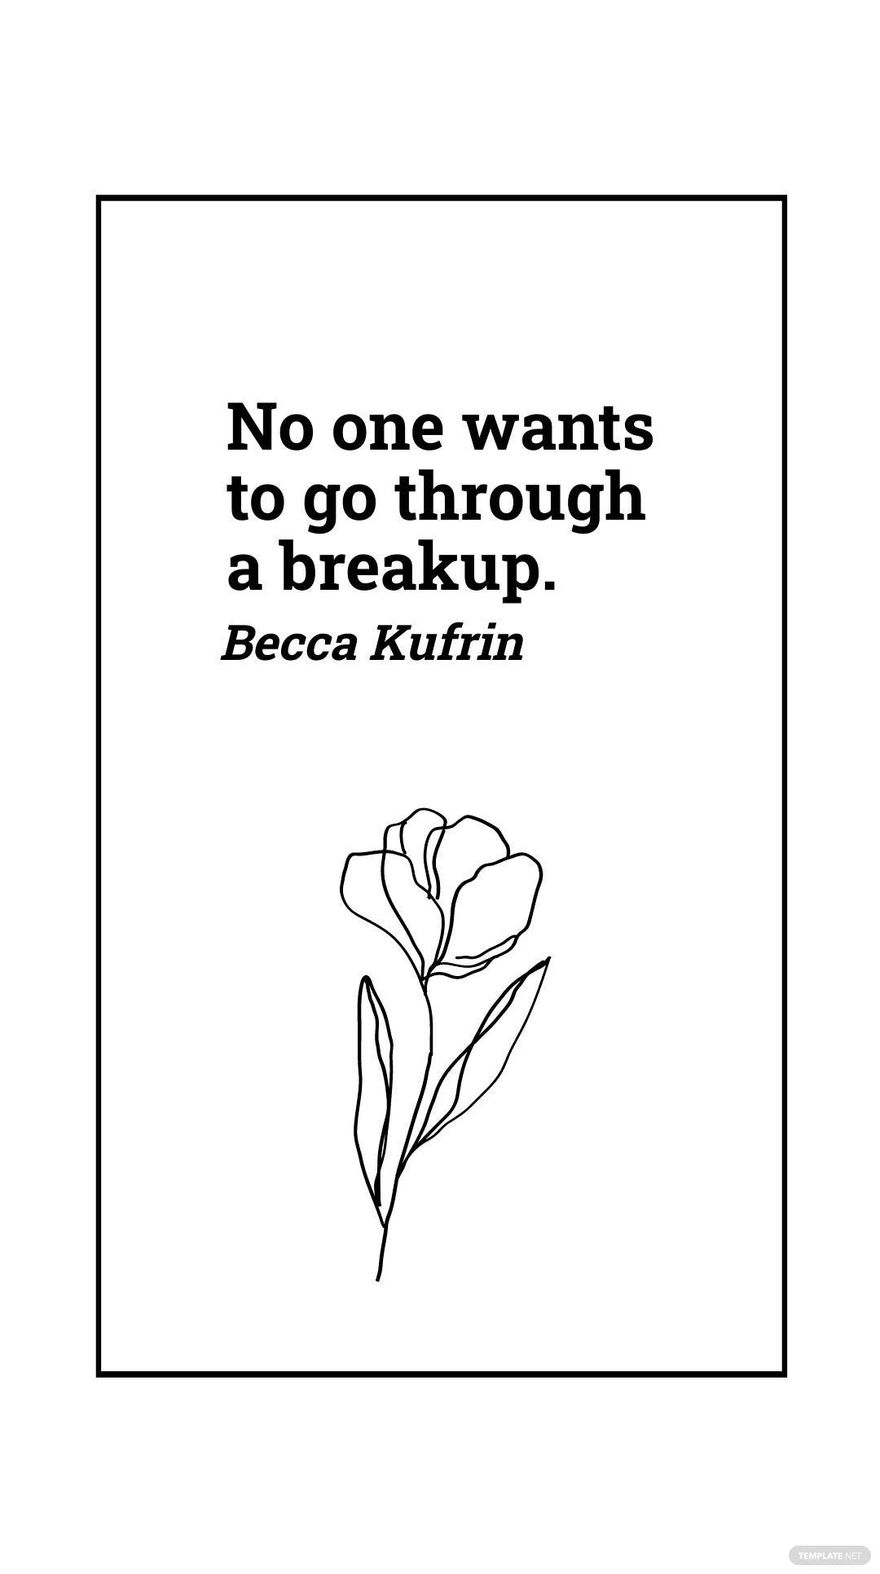 Free Becca Kufrin - No one wants to go through a breakup. in JPG